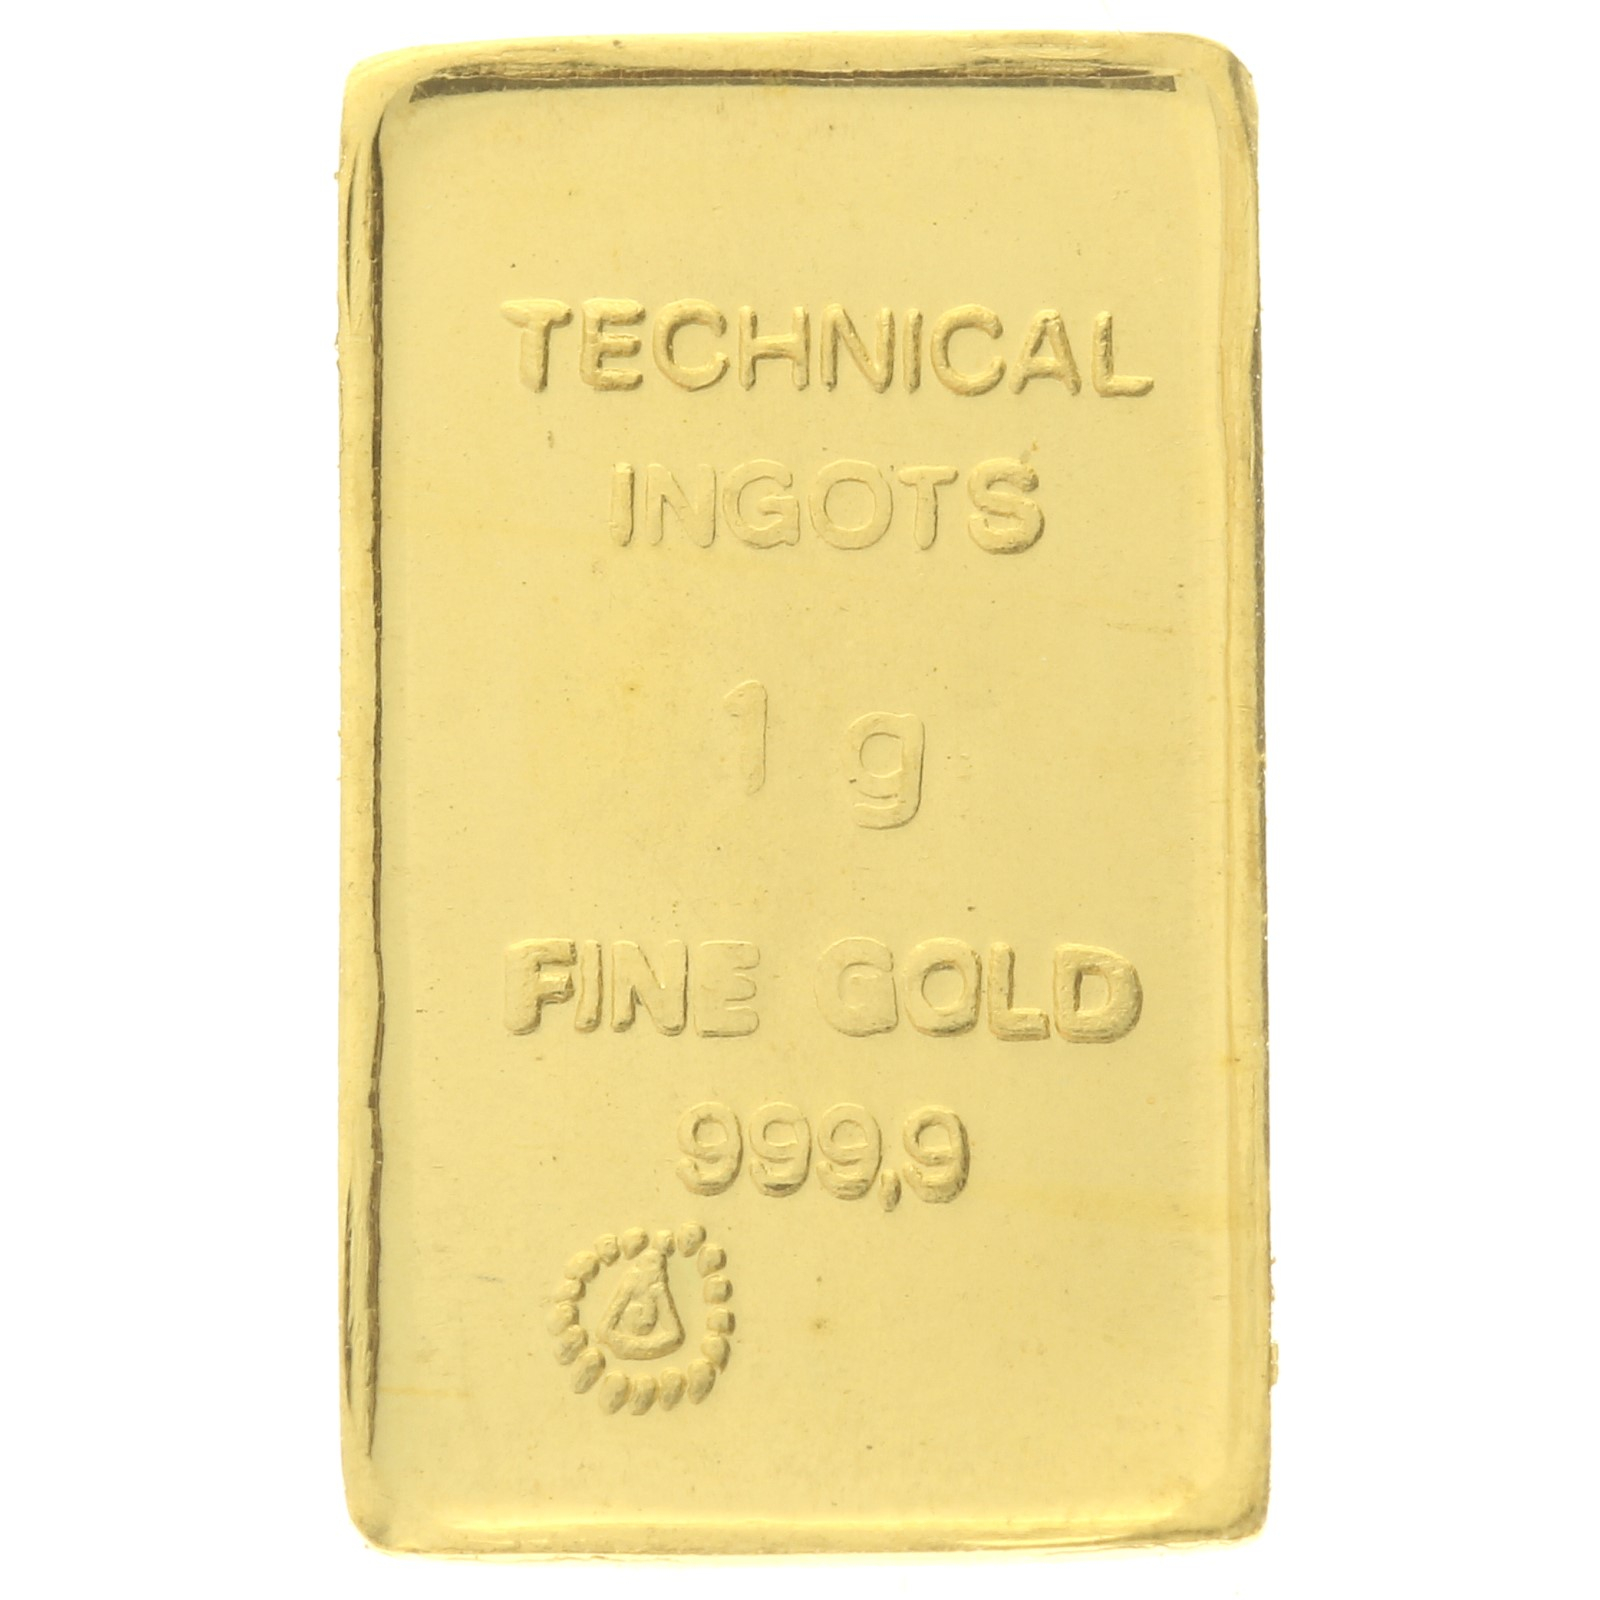 Germany - 1 gram fine gold - bar - Technical ingots 